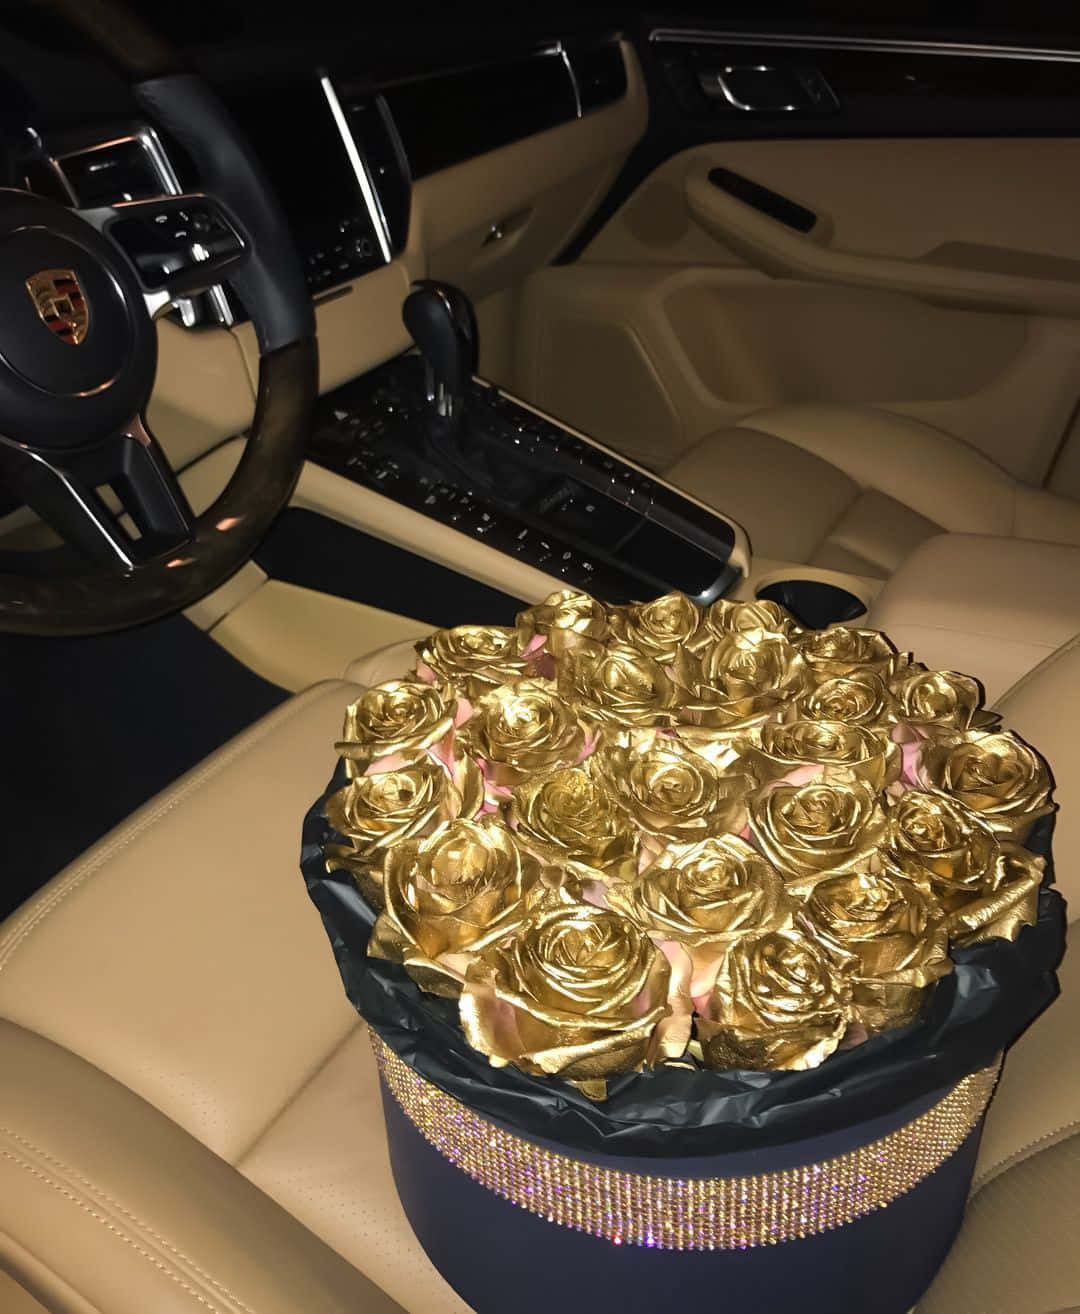 A Gold Rose Bouquet In A Car Wallpaper